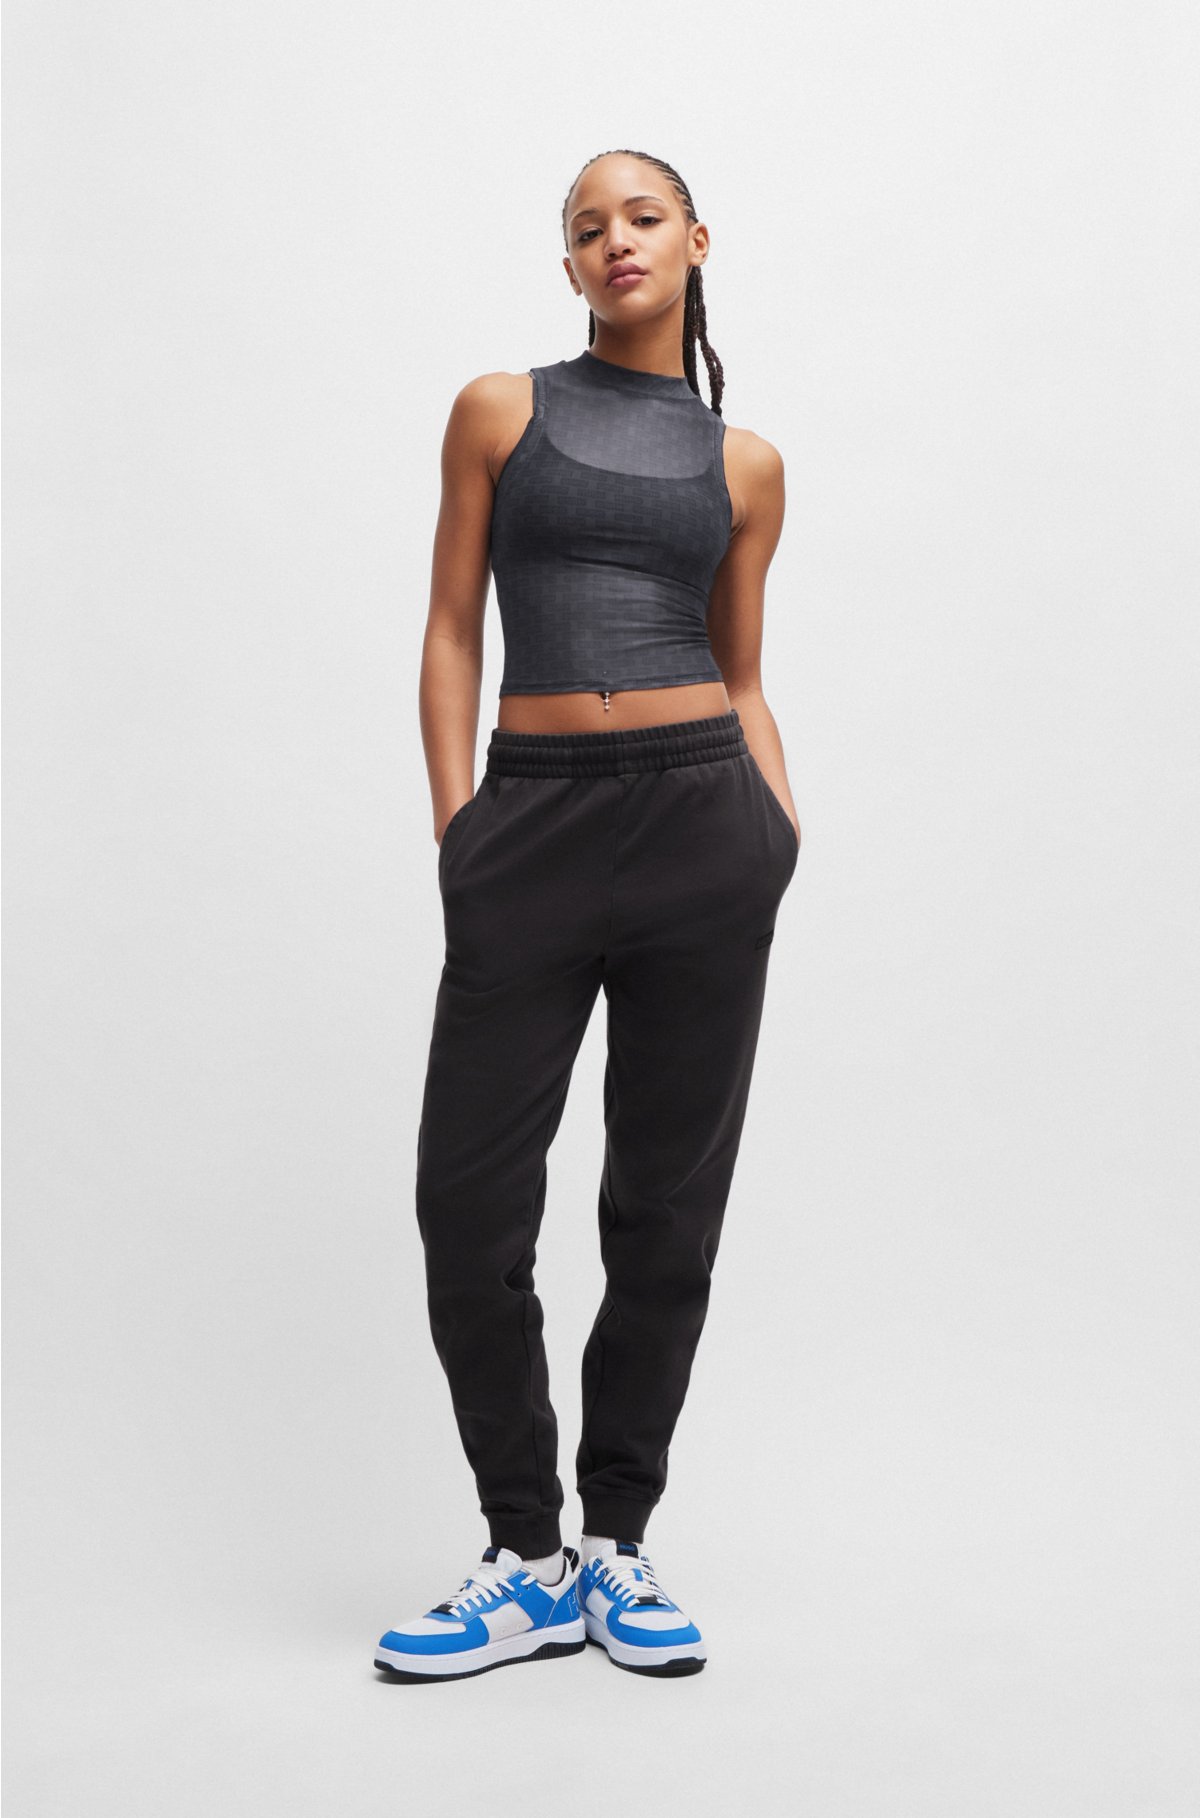 Slim-fit sleeveless top in logo mesh, Black Patterned